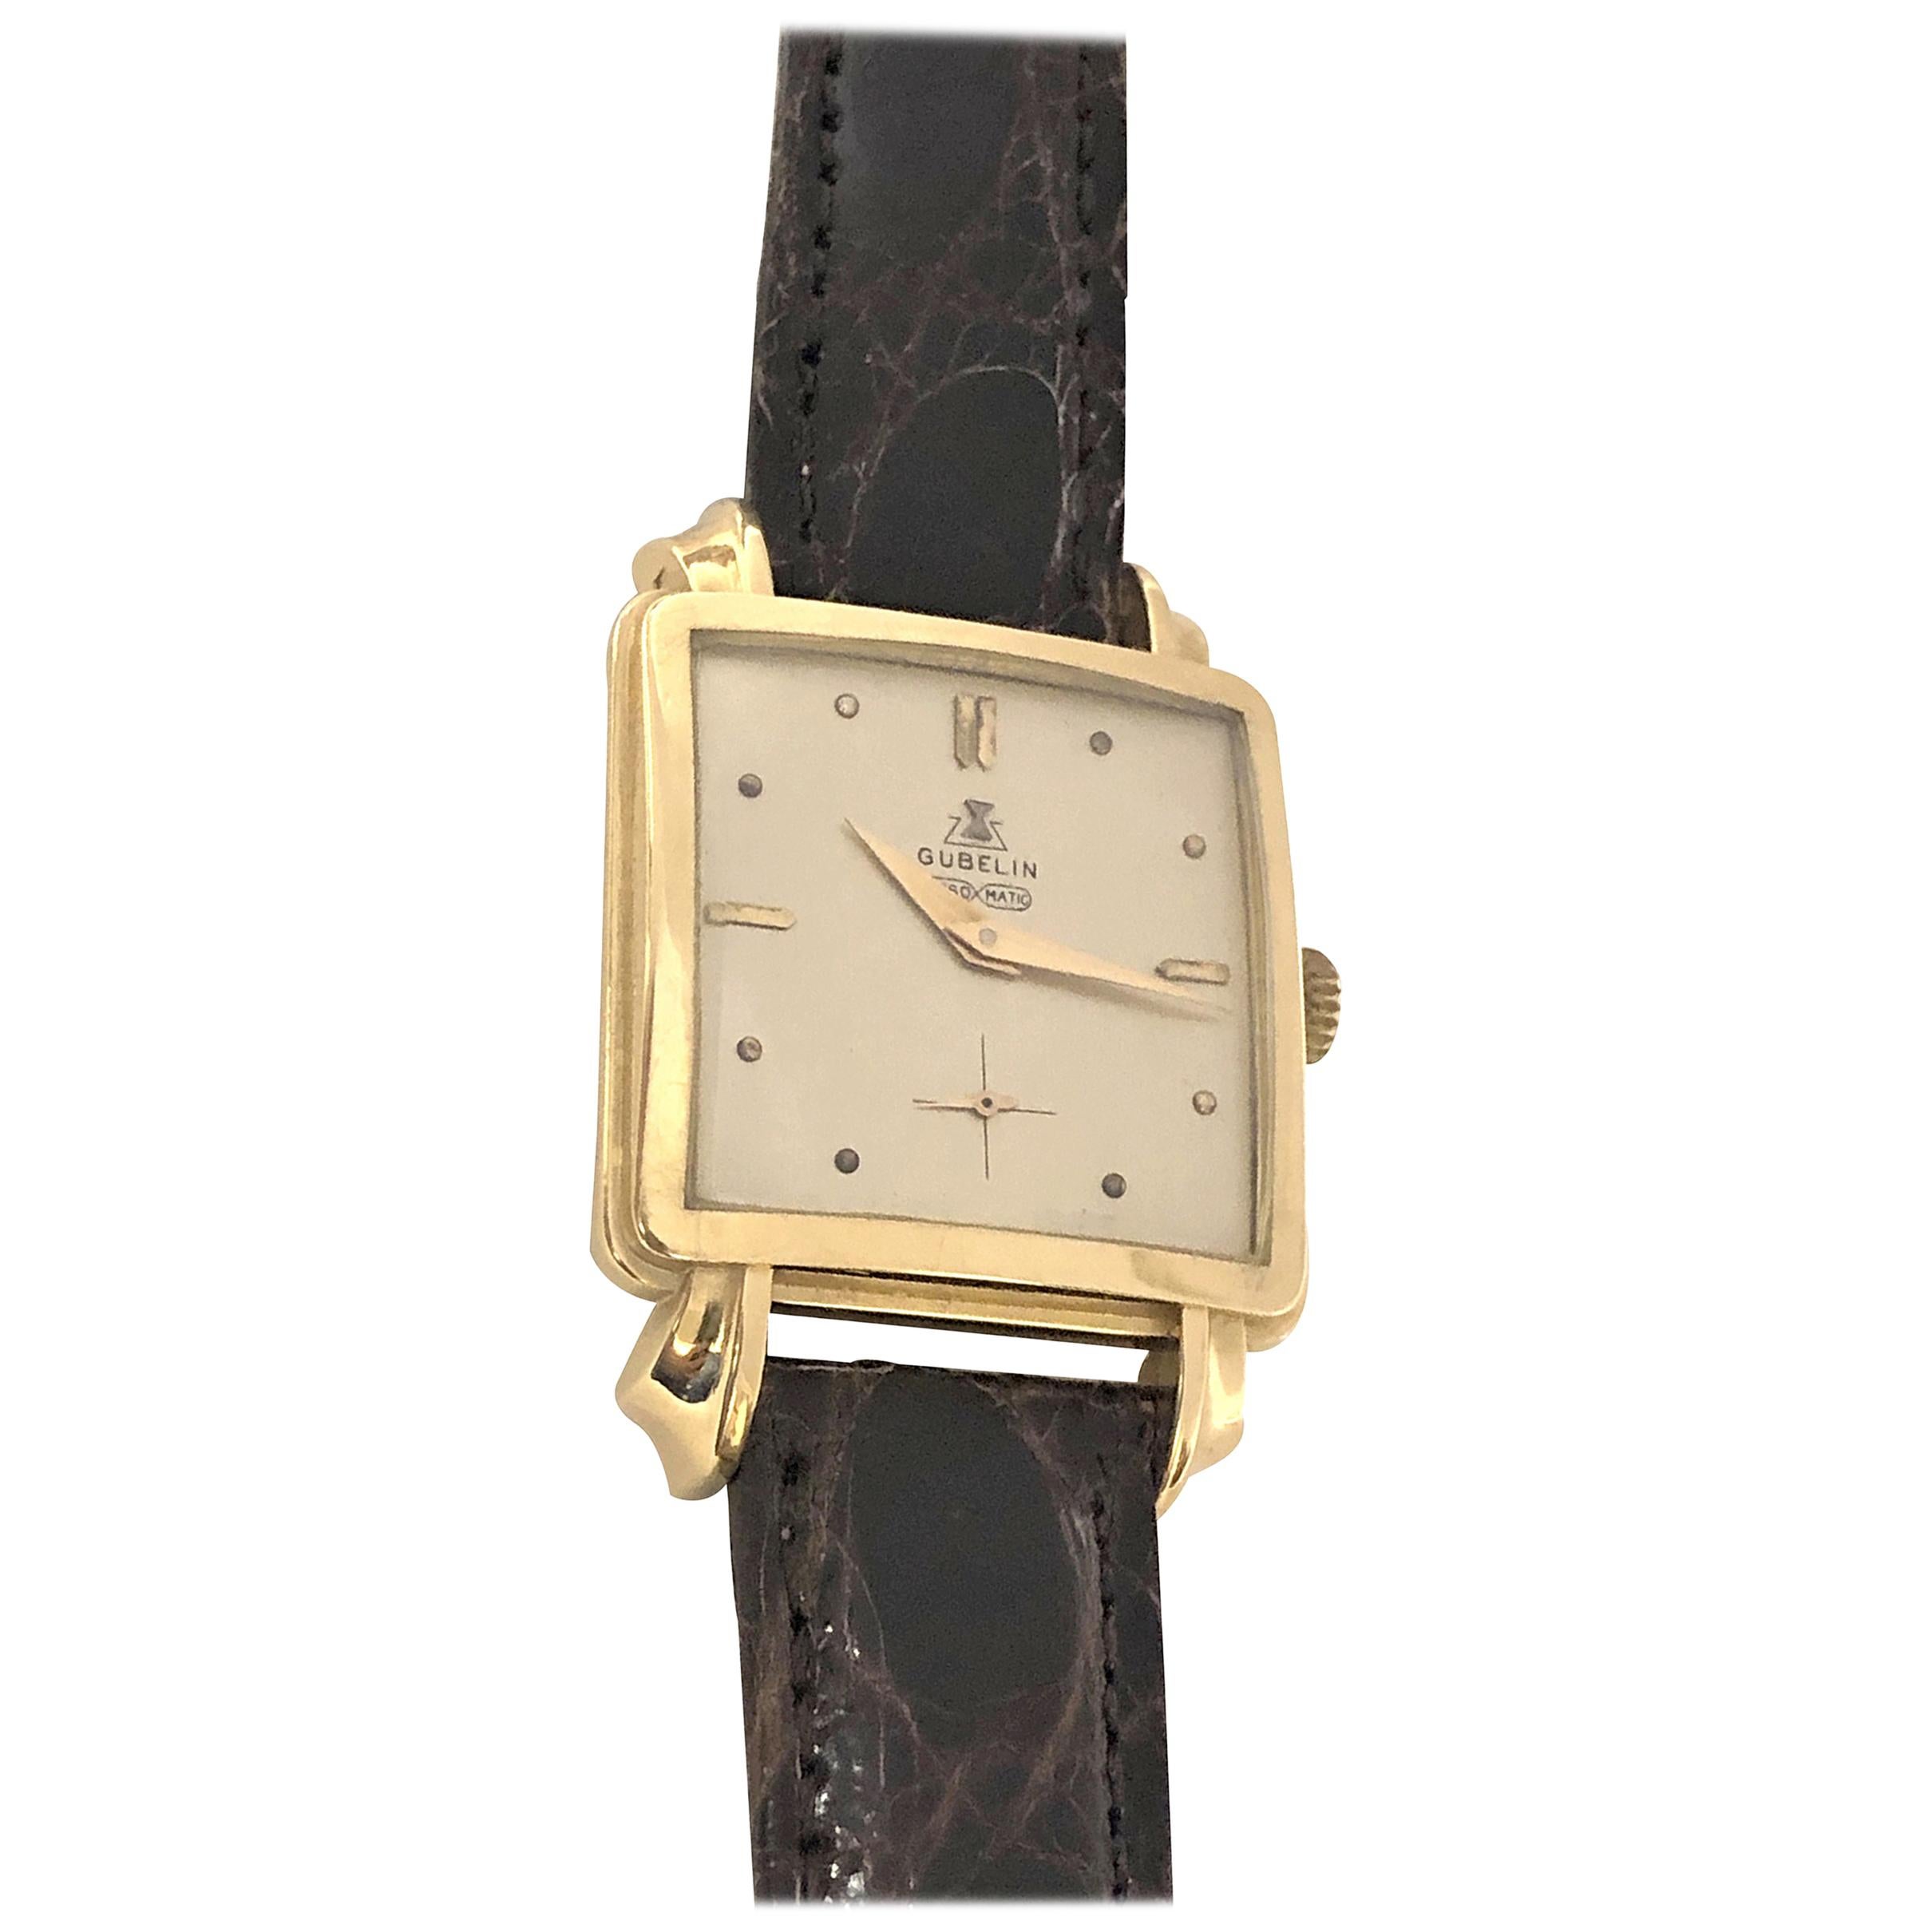 Gubelin Yellow Gold Oversize 1940s Gents Mechanical Wristwatch